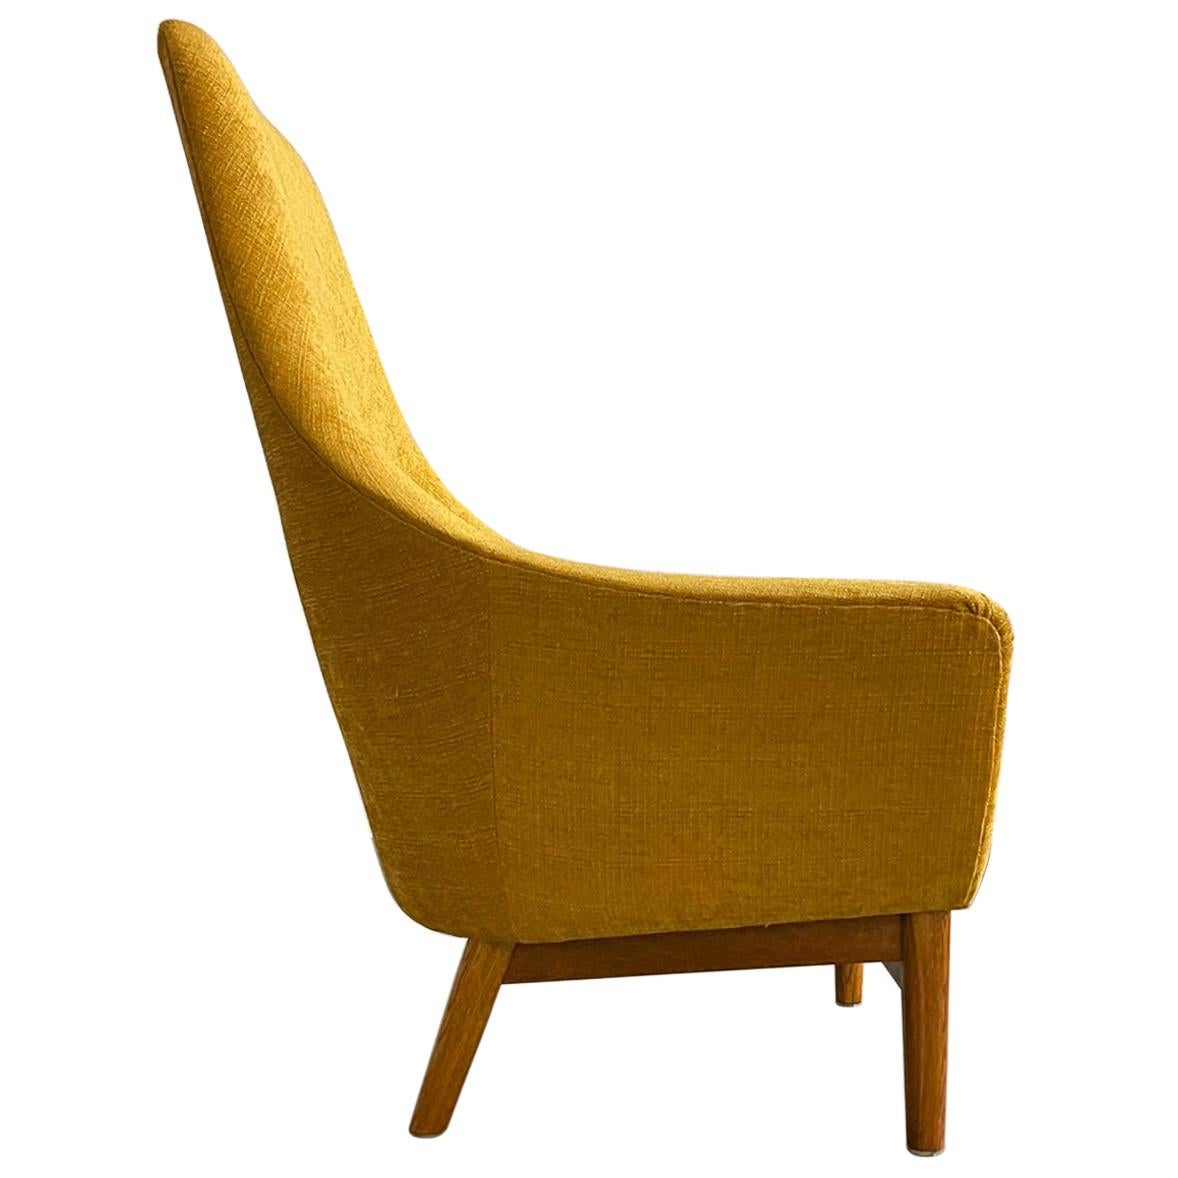 Midcentury Mustard Colored Lounge Chair S.M. Wincrantz, Sweden